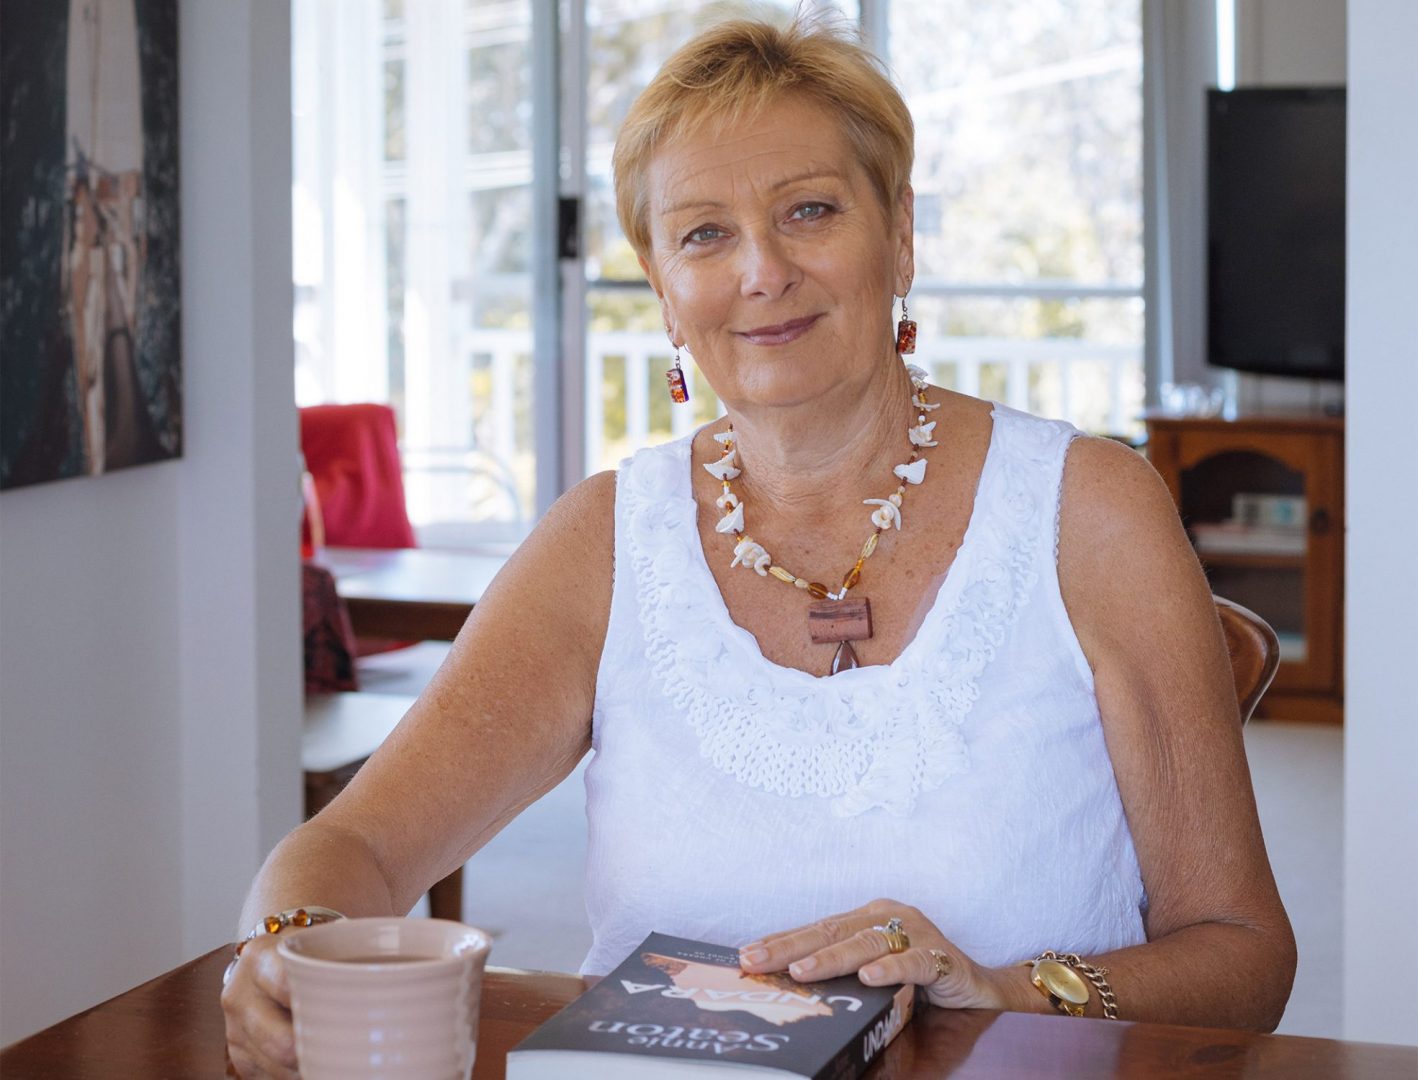 Coastbeat chats to trailblazing author Annie Seaton